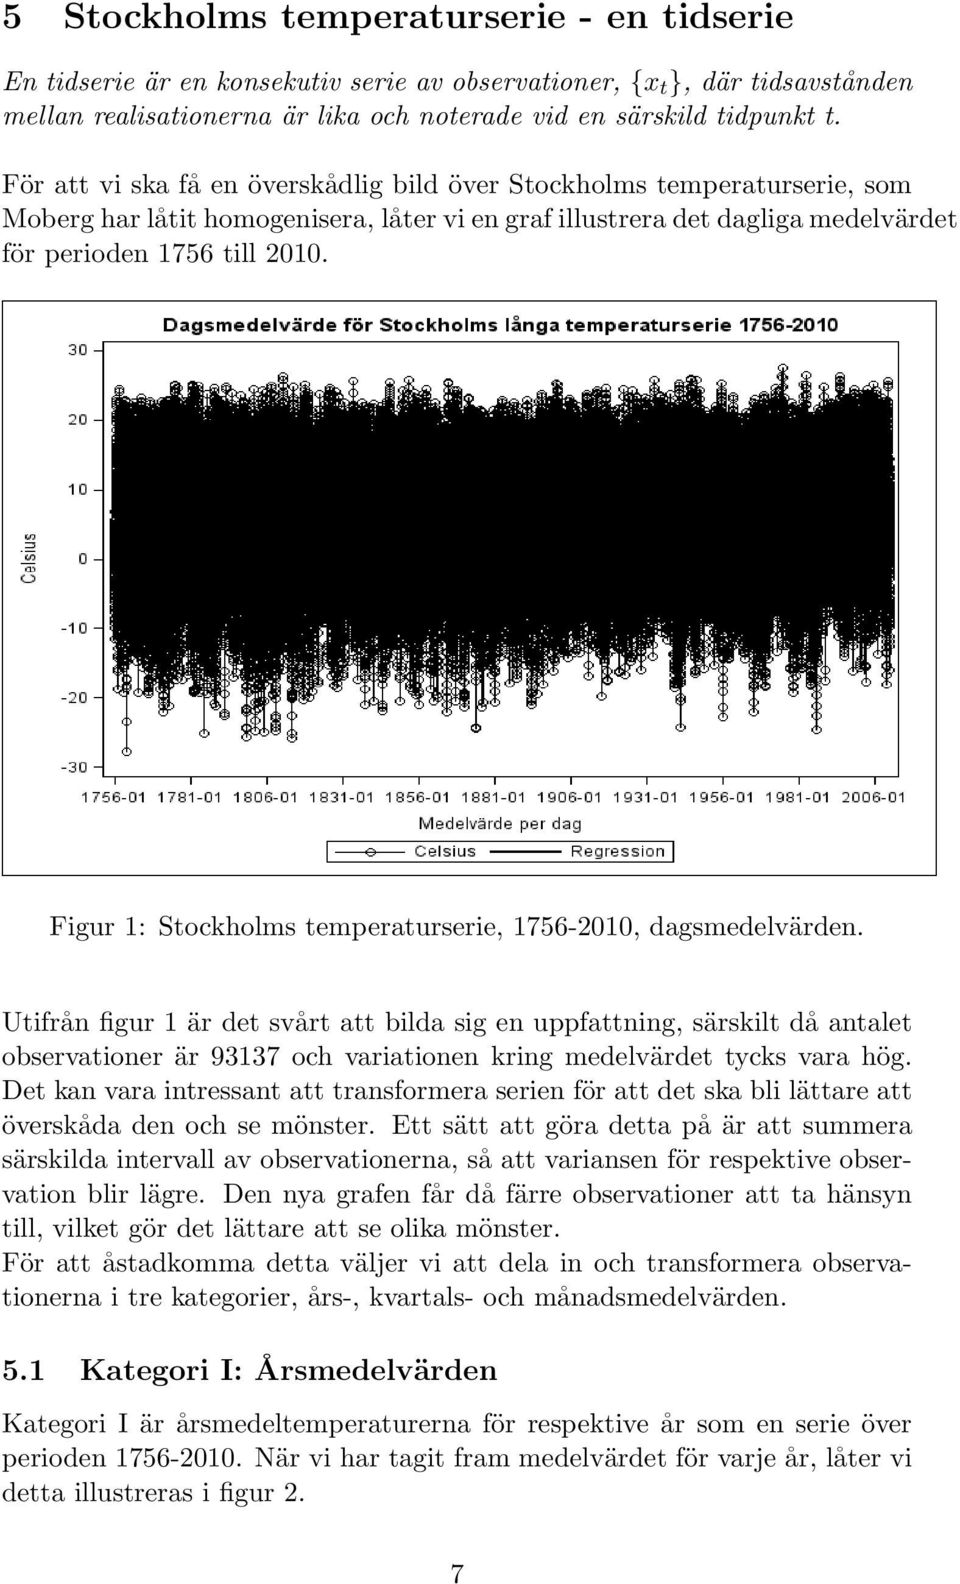 Figur 1: Stockholms temperaturserie, 1756-2010, dagsmedelvärden.